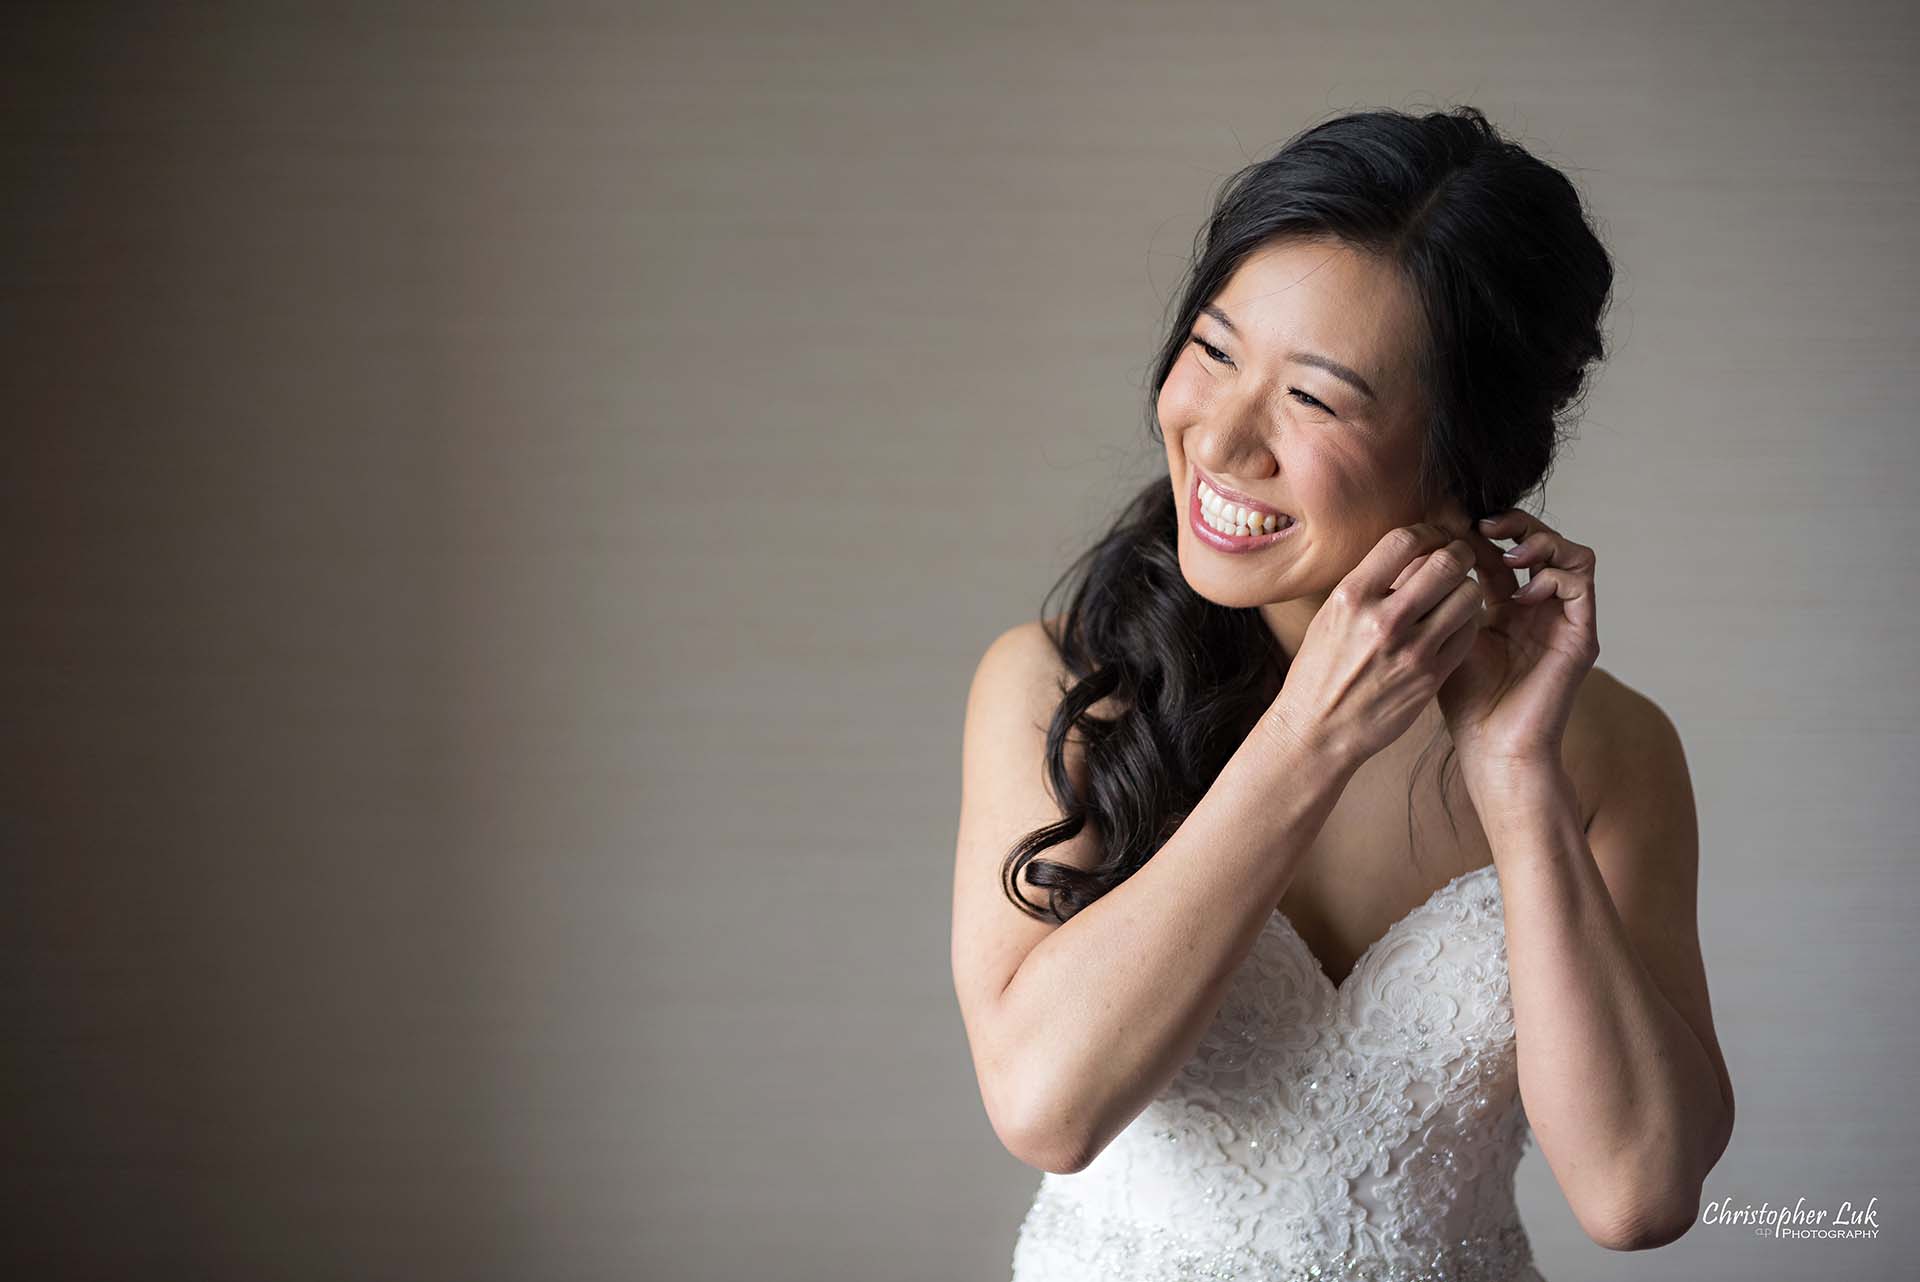 Christopher Luk Toronto Wedding Photographer Hotel Bride Getting Ready Details Bridal Gown Dress Earrings